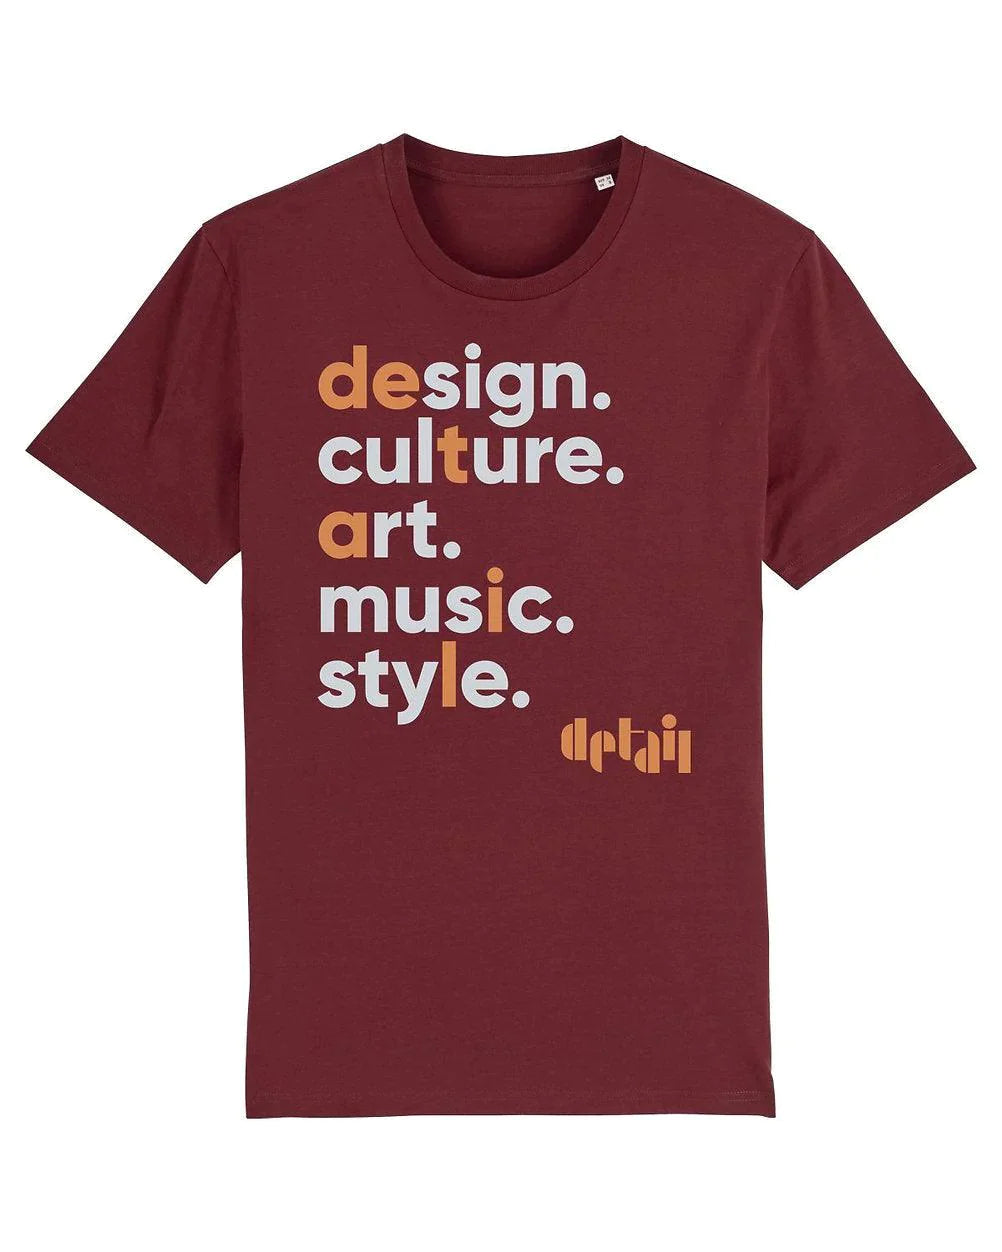 DETAIL: T-Shirt Official Merchandise for Detail magazine - SOUND IS COLOUR